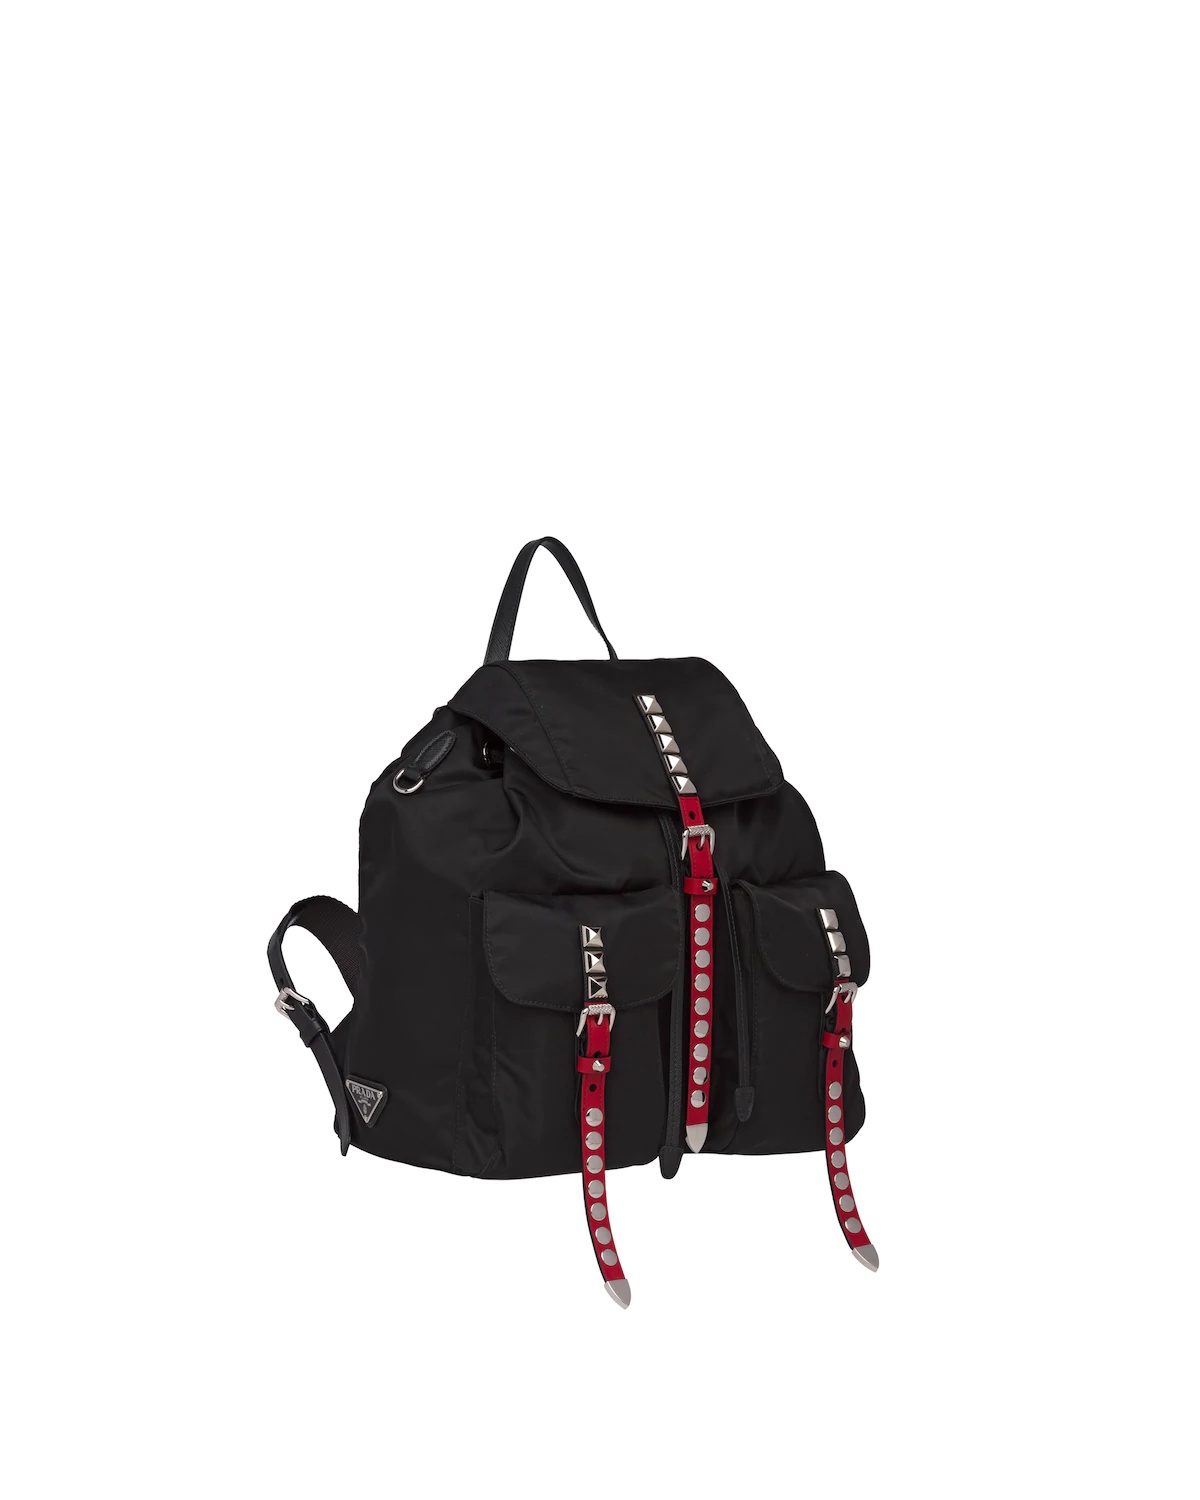 Prada Black Nylon Backpack - 3